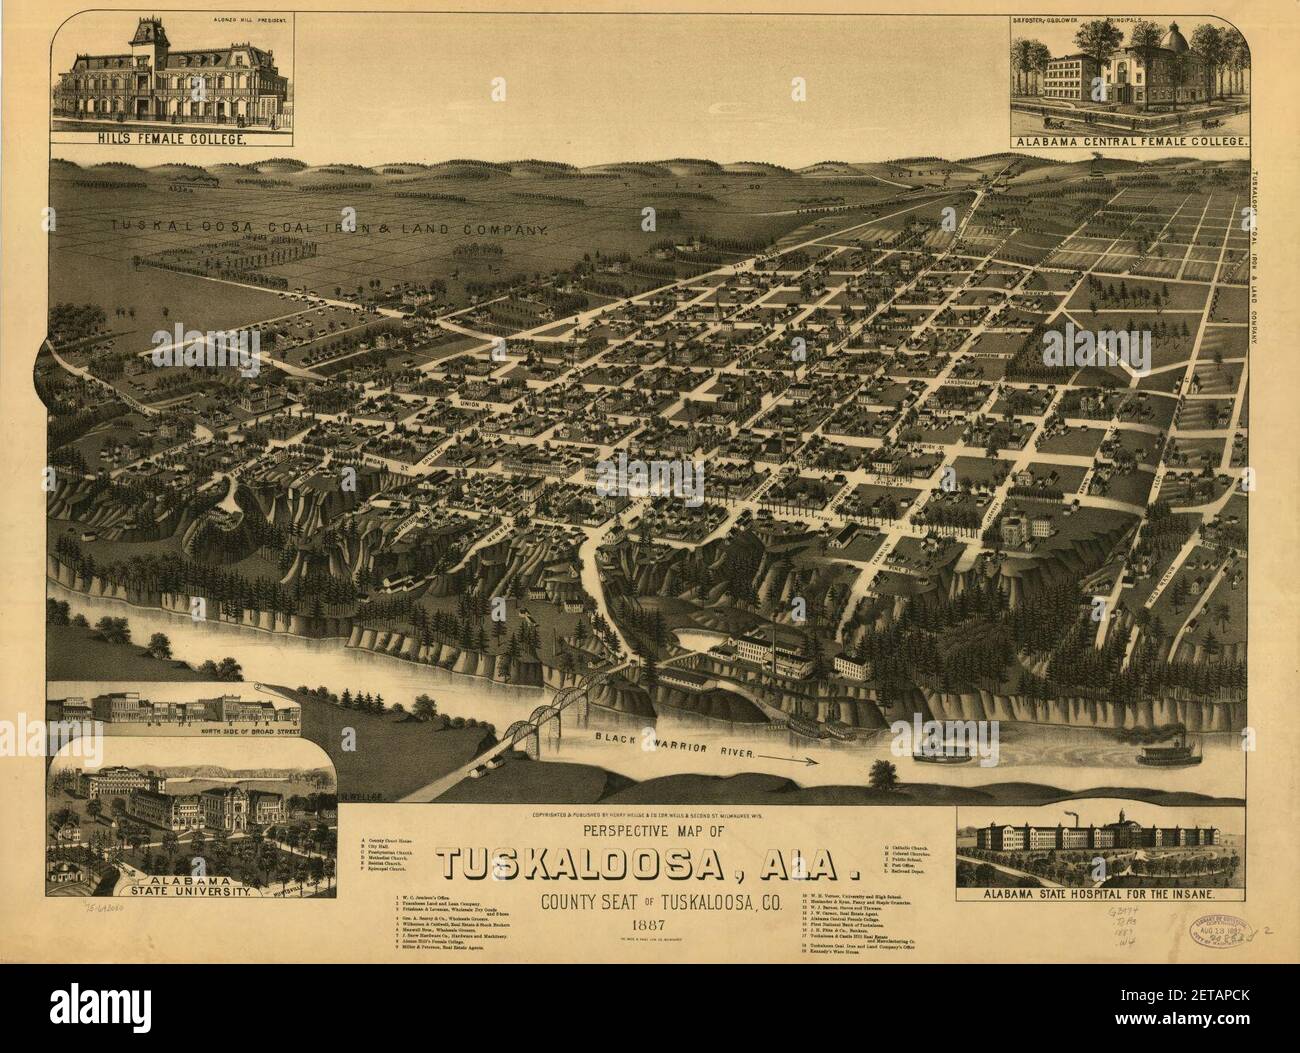 Perspective map of Tuskaloosa, Ala. county seat of Tuskaloosa, Co. 1887. Stock Photo